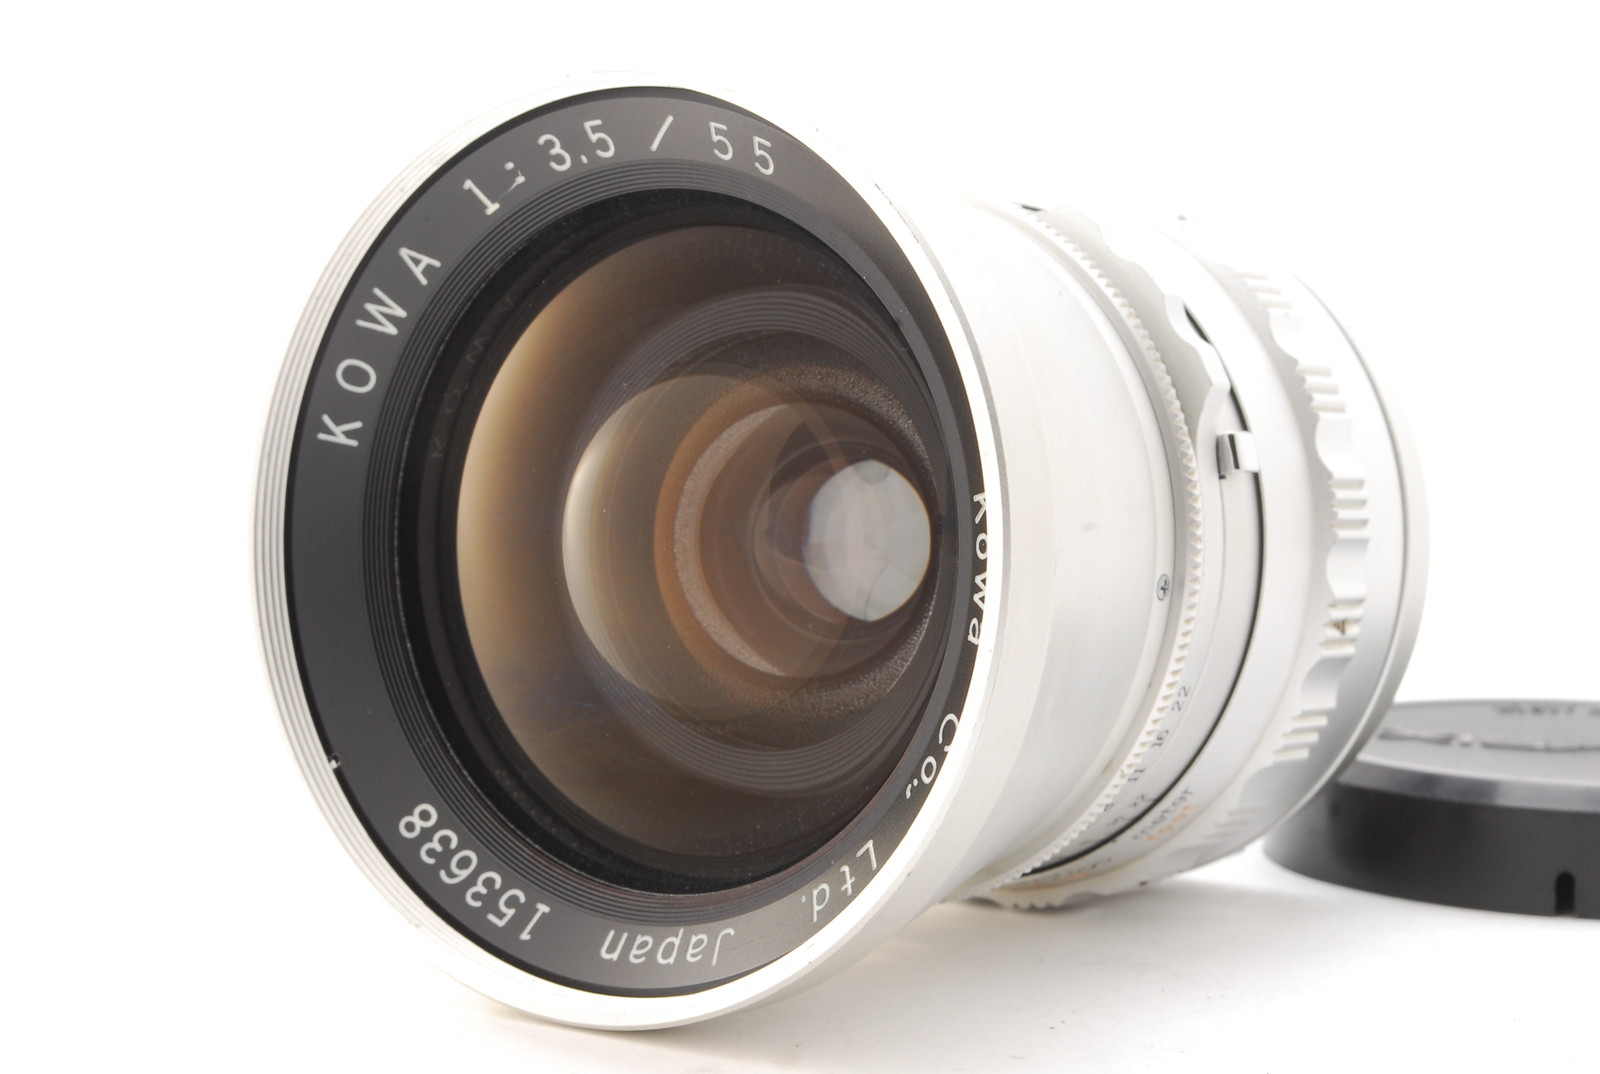 PROMOTION. EXC+4 KOWA 55mm f/3.5 KOWA 식스, MM 실버 렌즈, 후면 캡 EXC+4 KOWA 55mm f/3.5 for KOWA SIX, KOWA SIX MM Silver Lens, Rear Cap from Japan